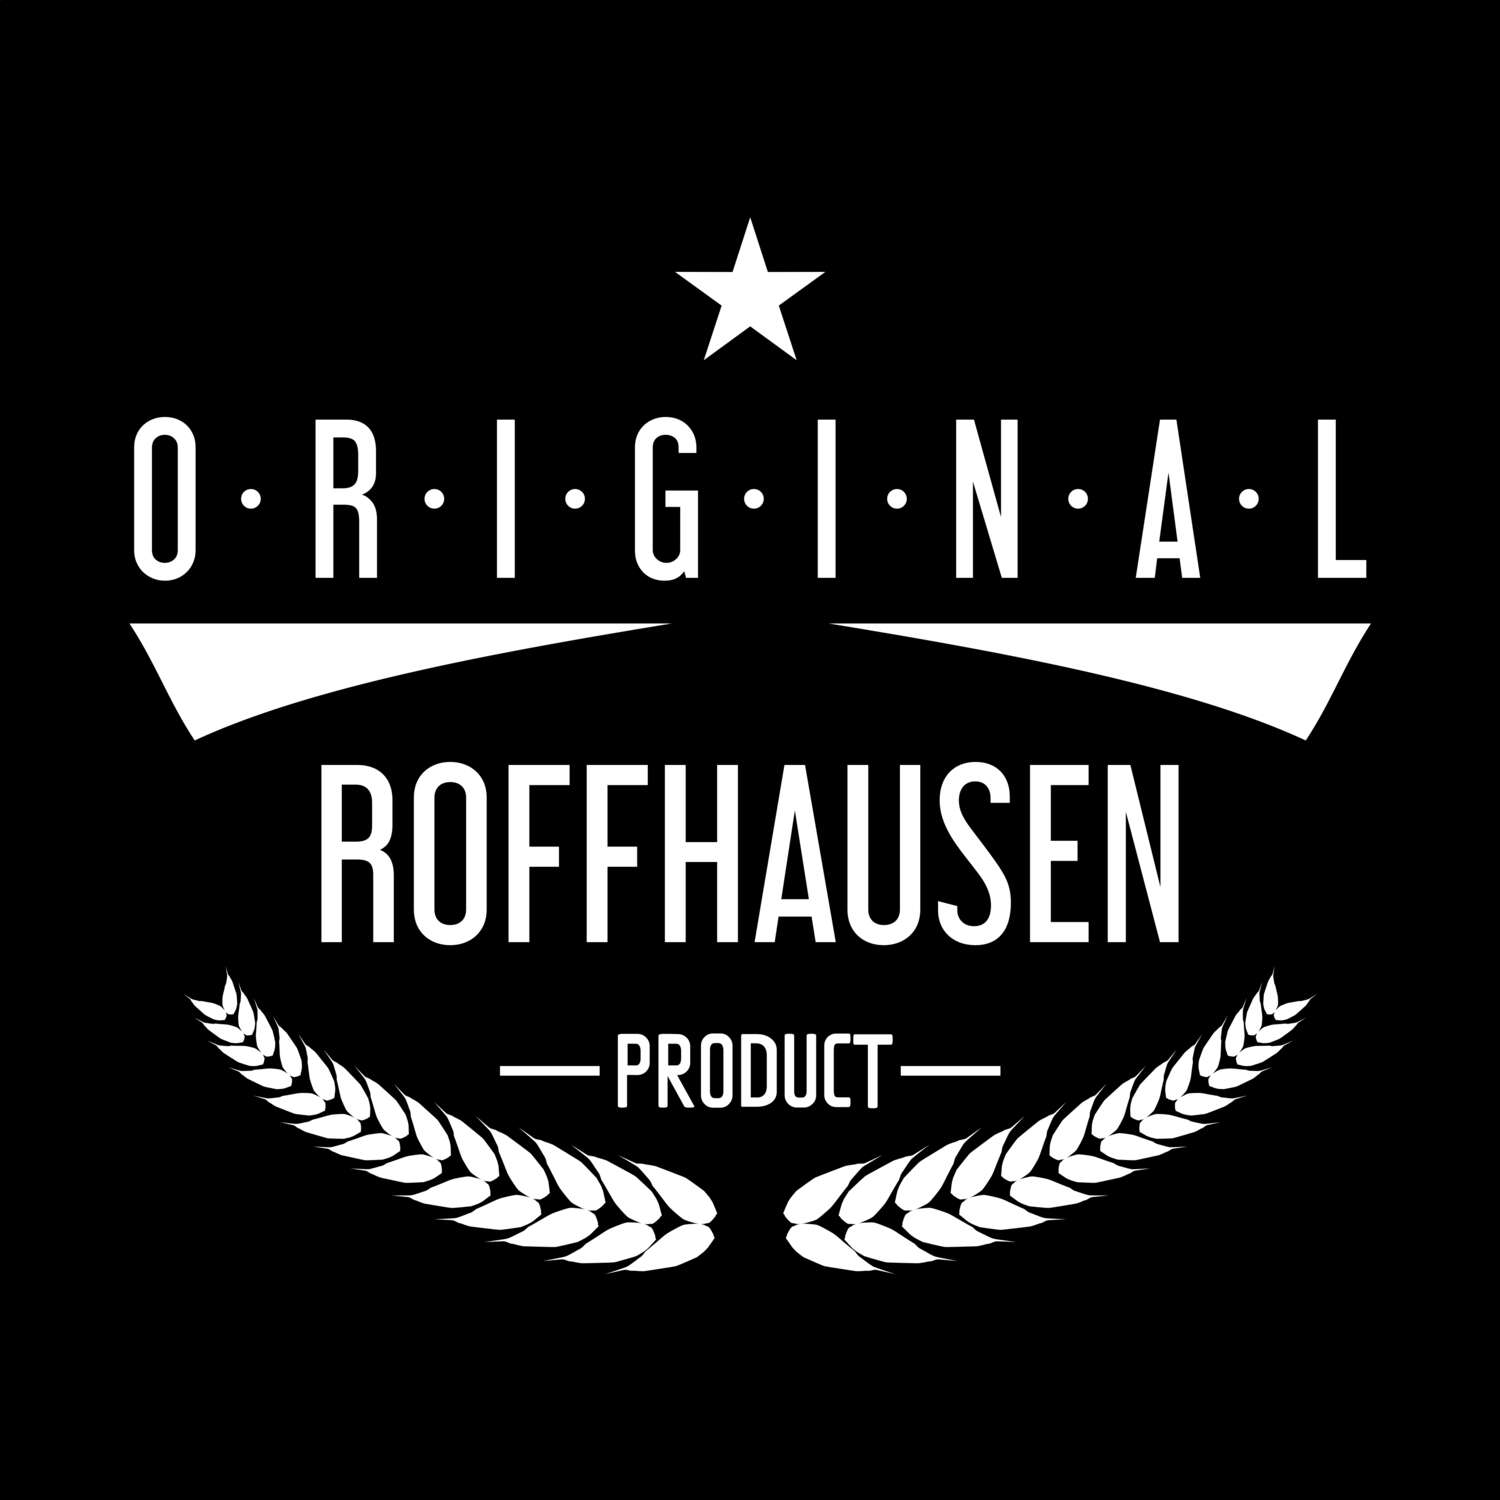 Roffhausen T-Shirt »Original Product«